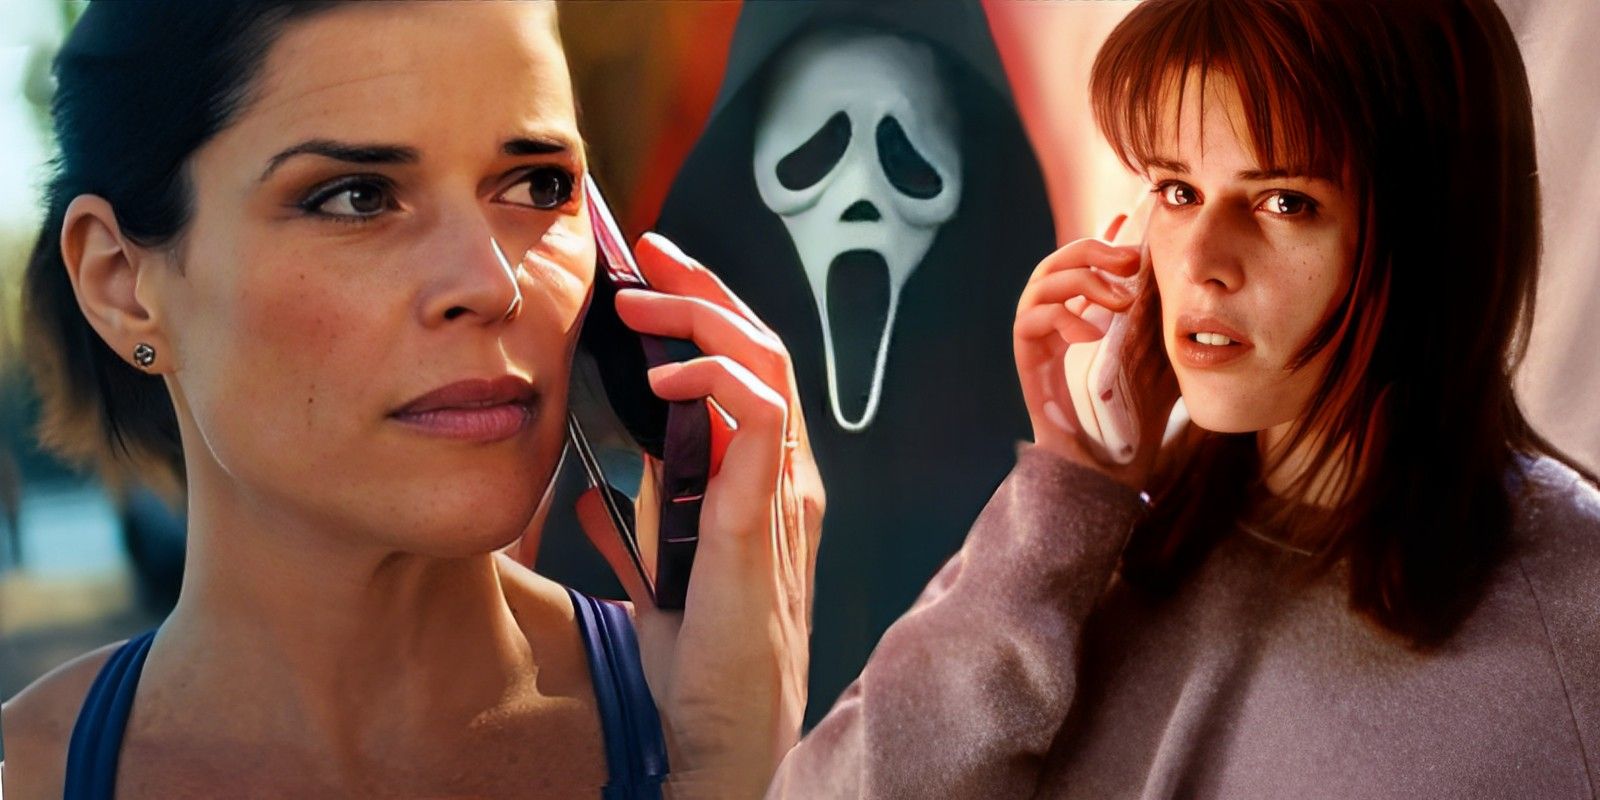 Sidney Prescott in Scream 1 & 5 on either side of Ghostface